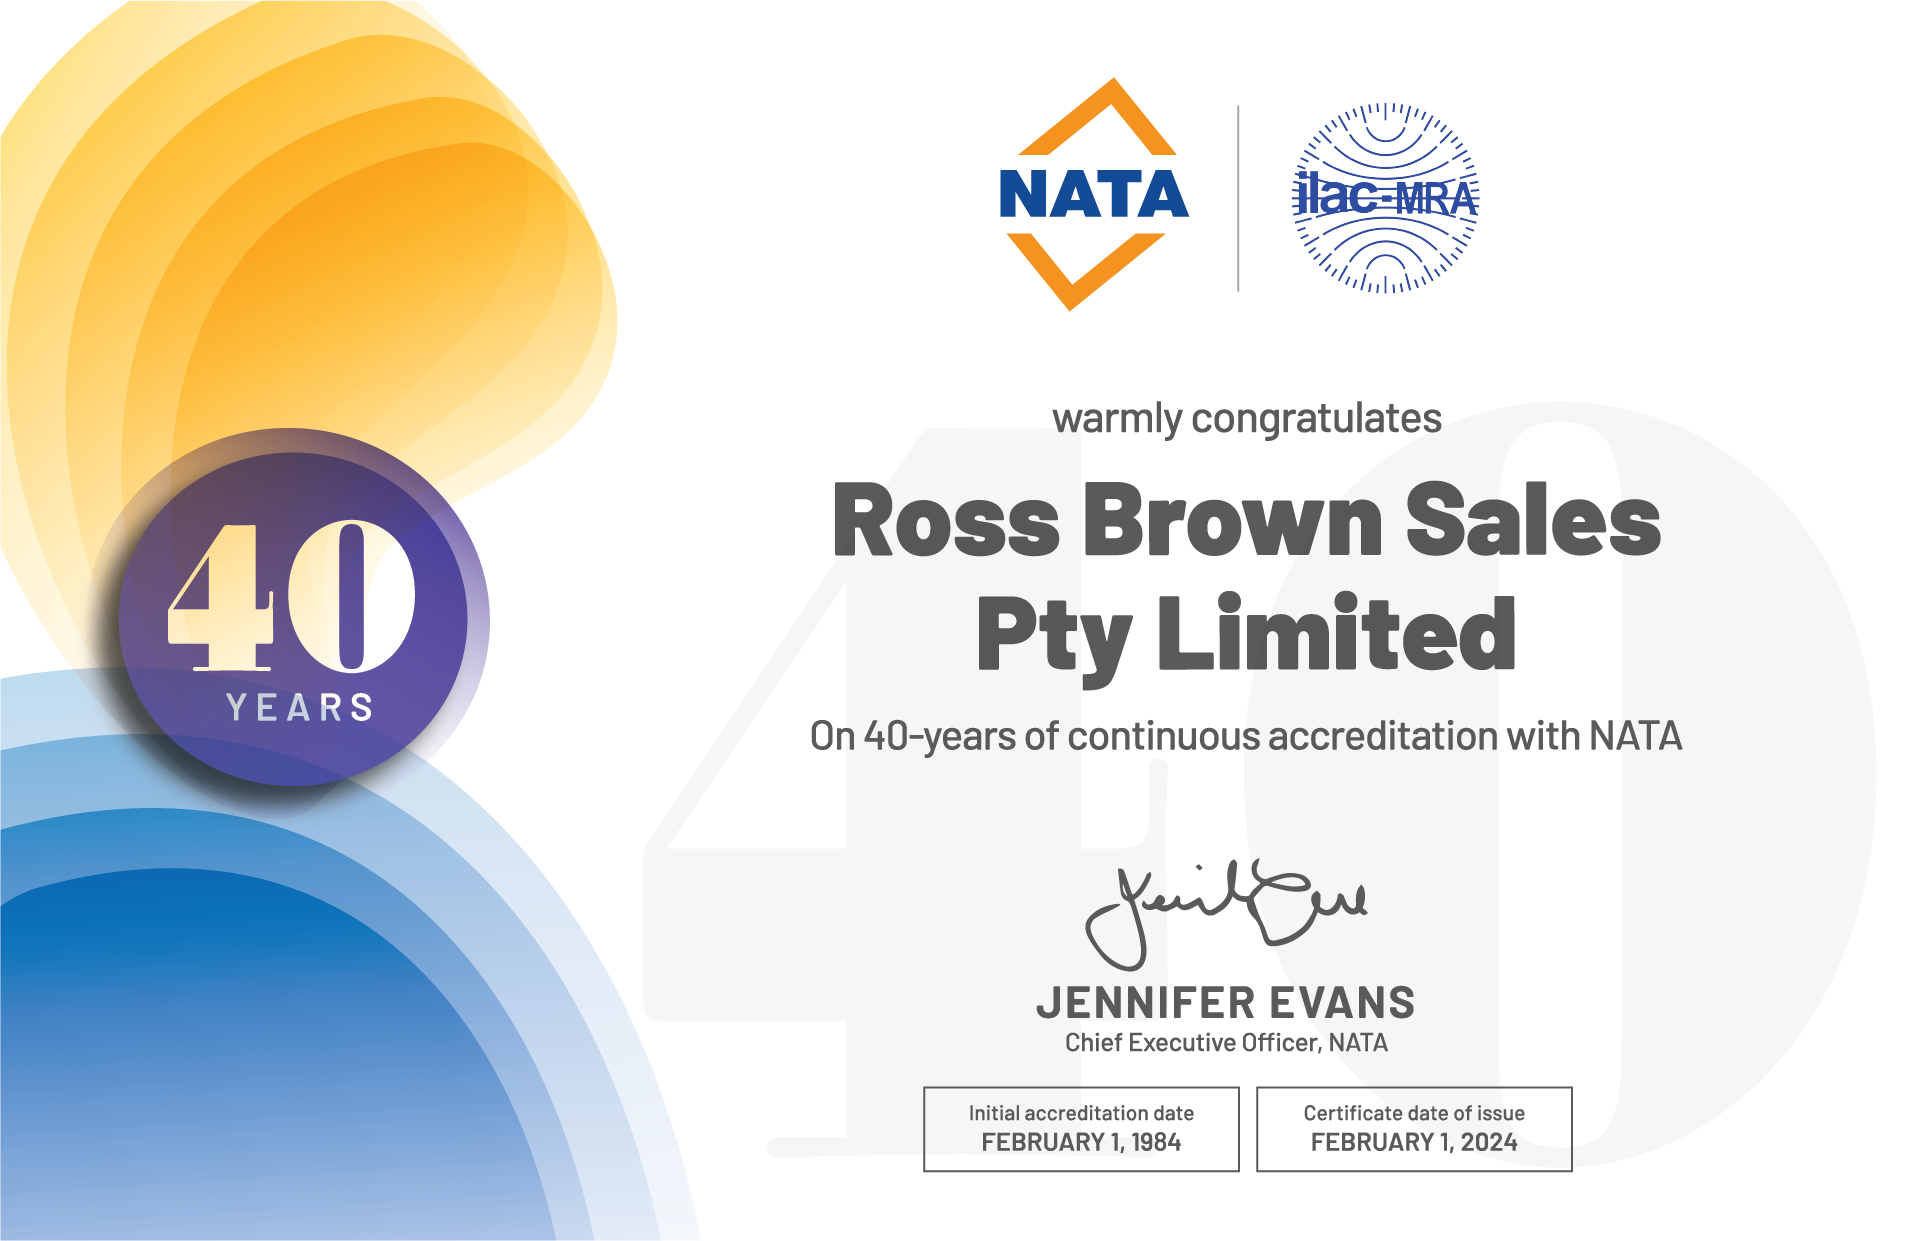 Ross Brown Sales 40 years NATA accreditation